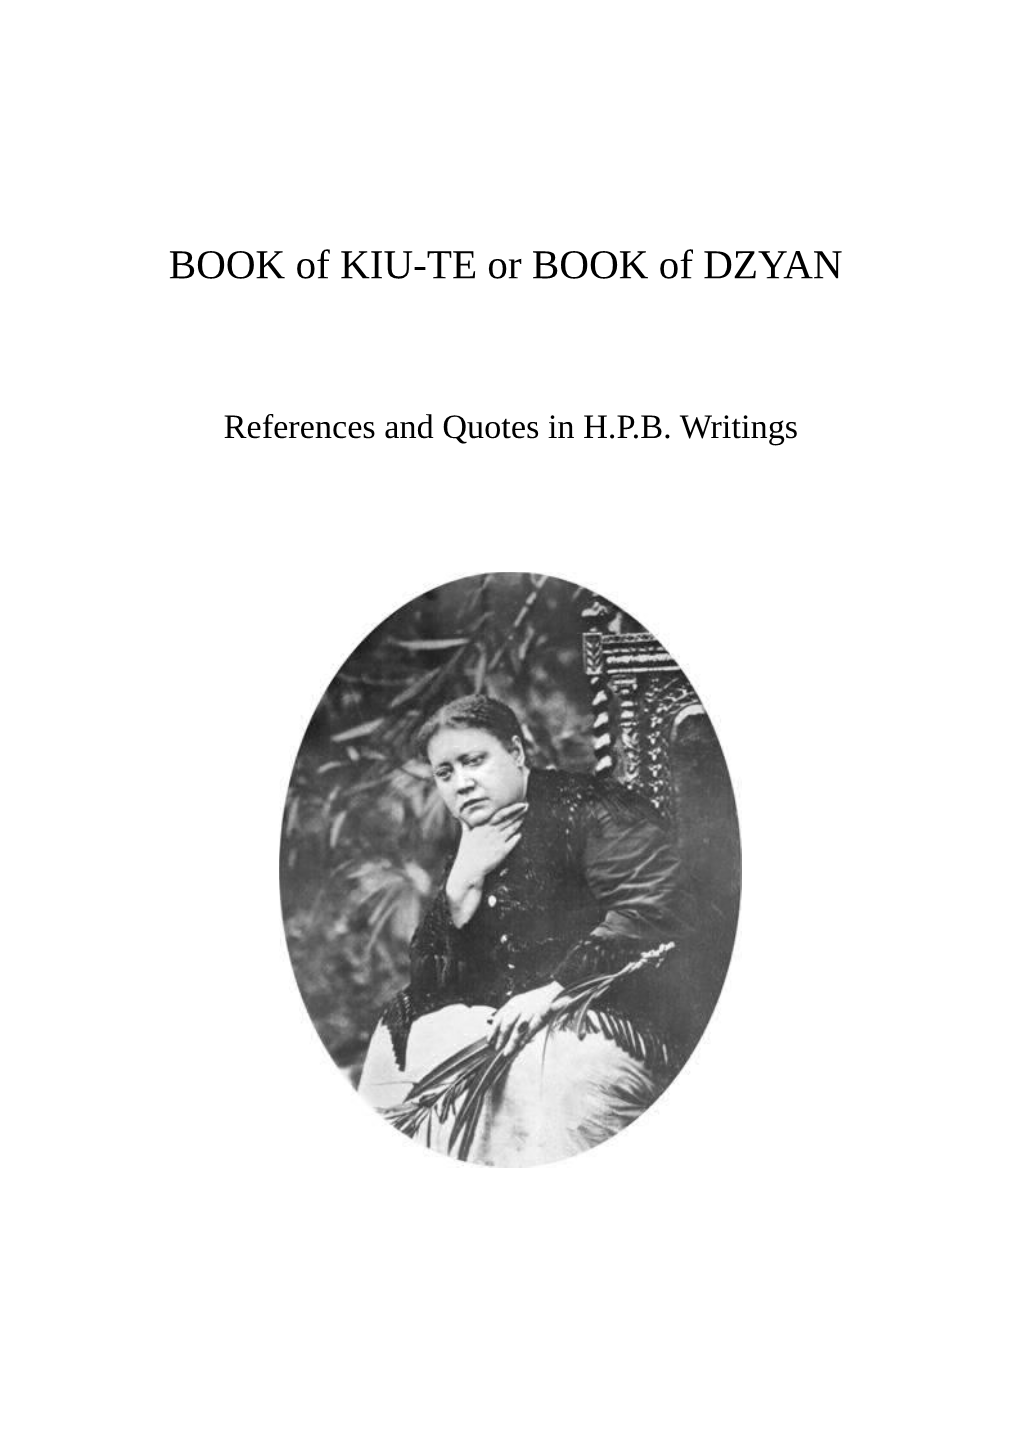 BOOK of KIU-TE Or BOOK of DZYAN